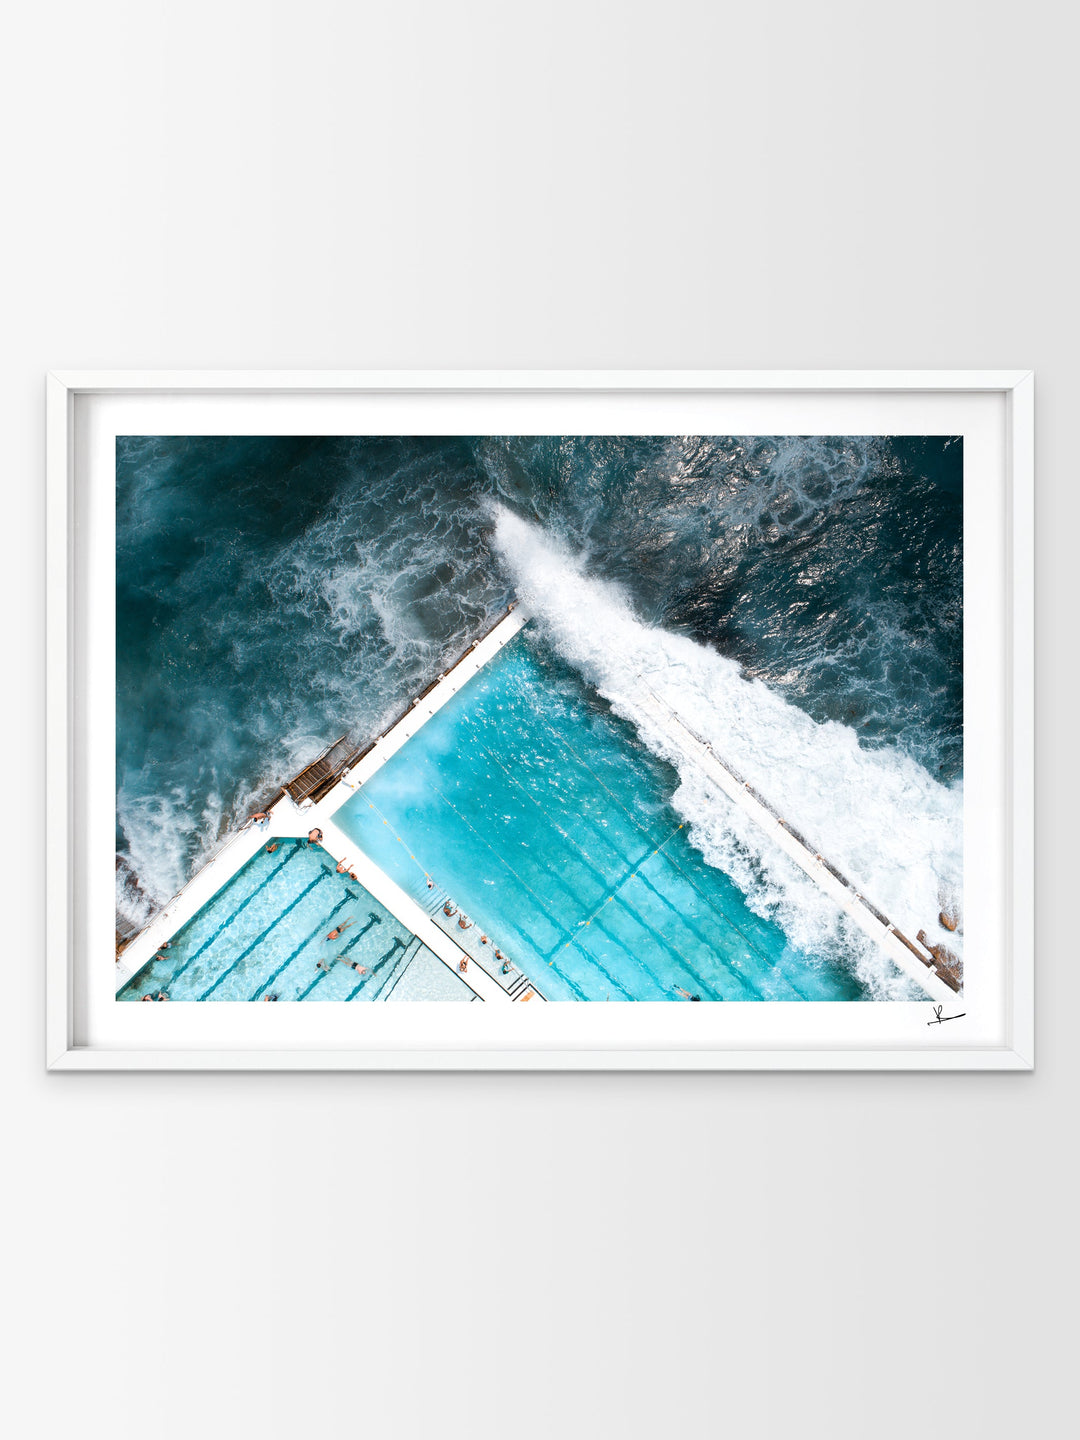 Icebergs Wipe Out 04 - Australia Unseen - Wall Art Print